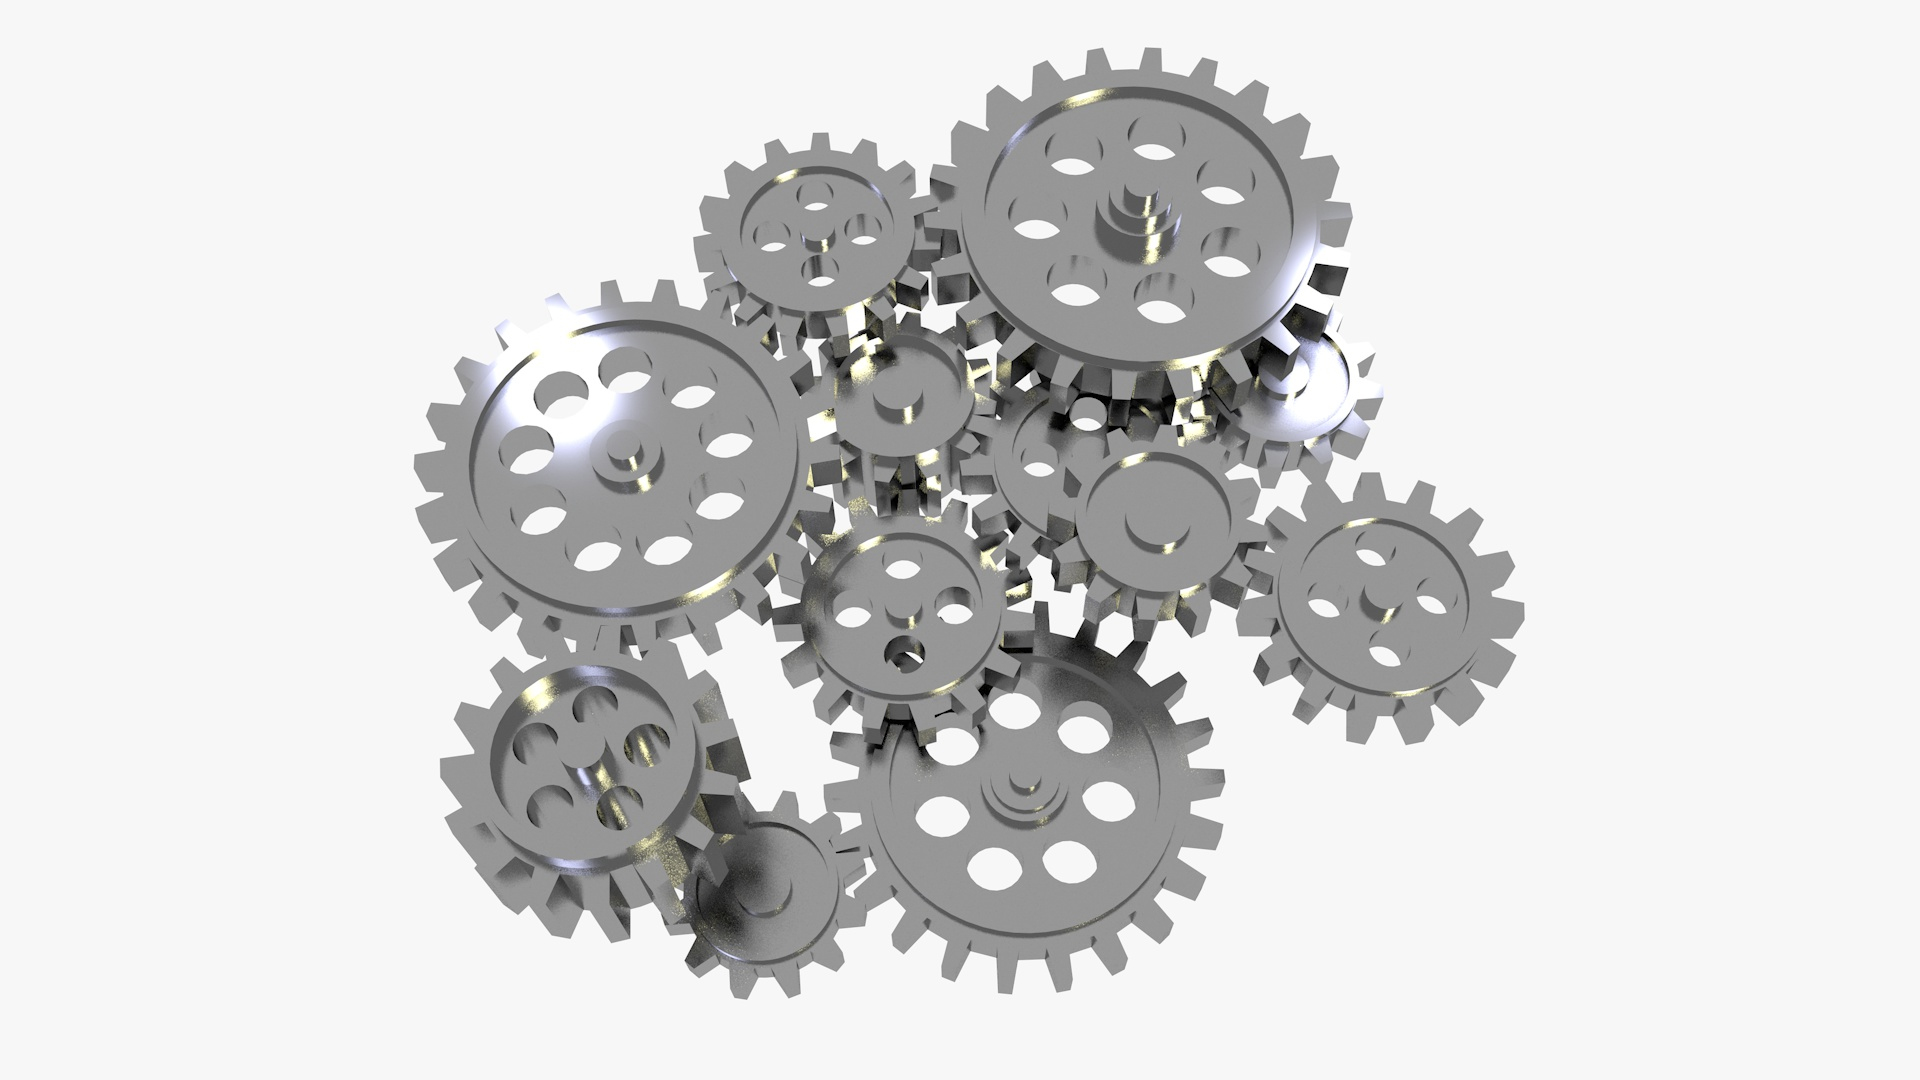 Gears 3d model render stock illustration. Illustration of objective -  58362337